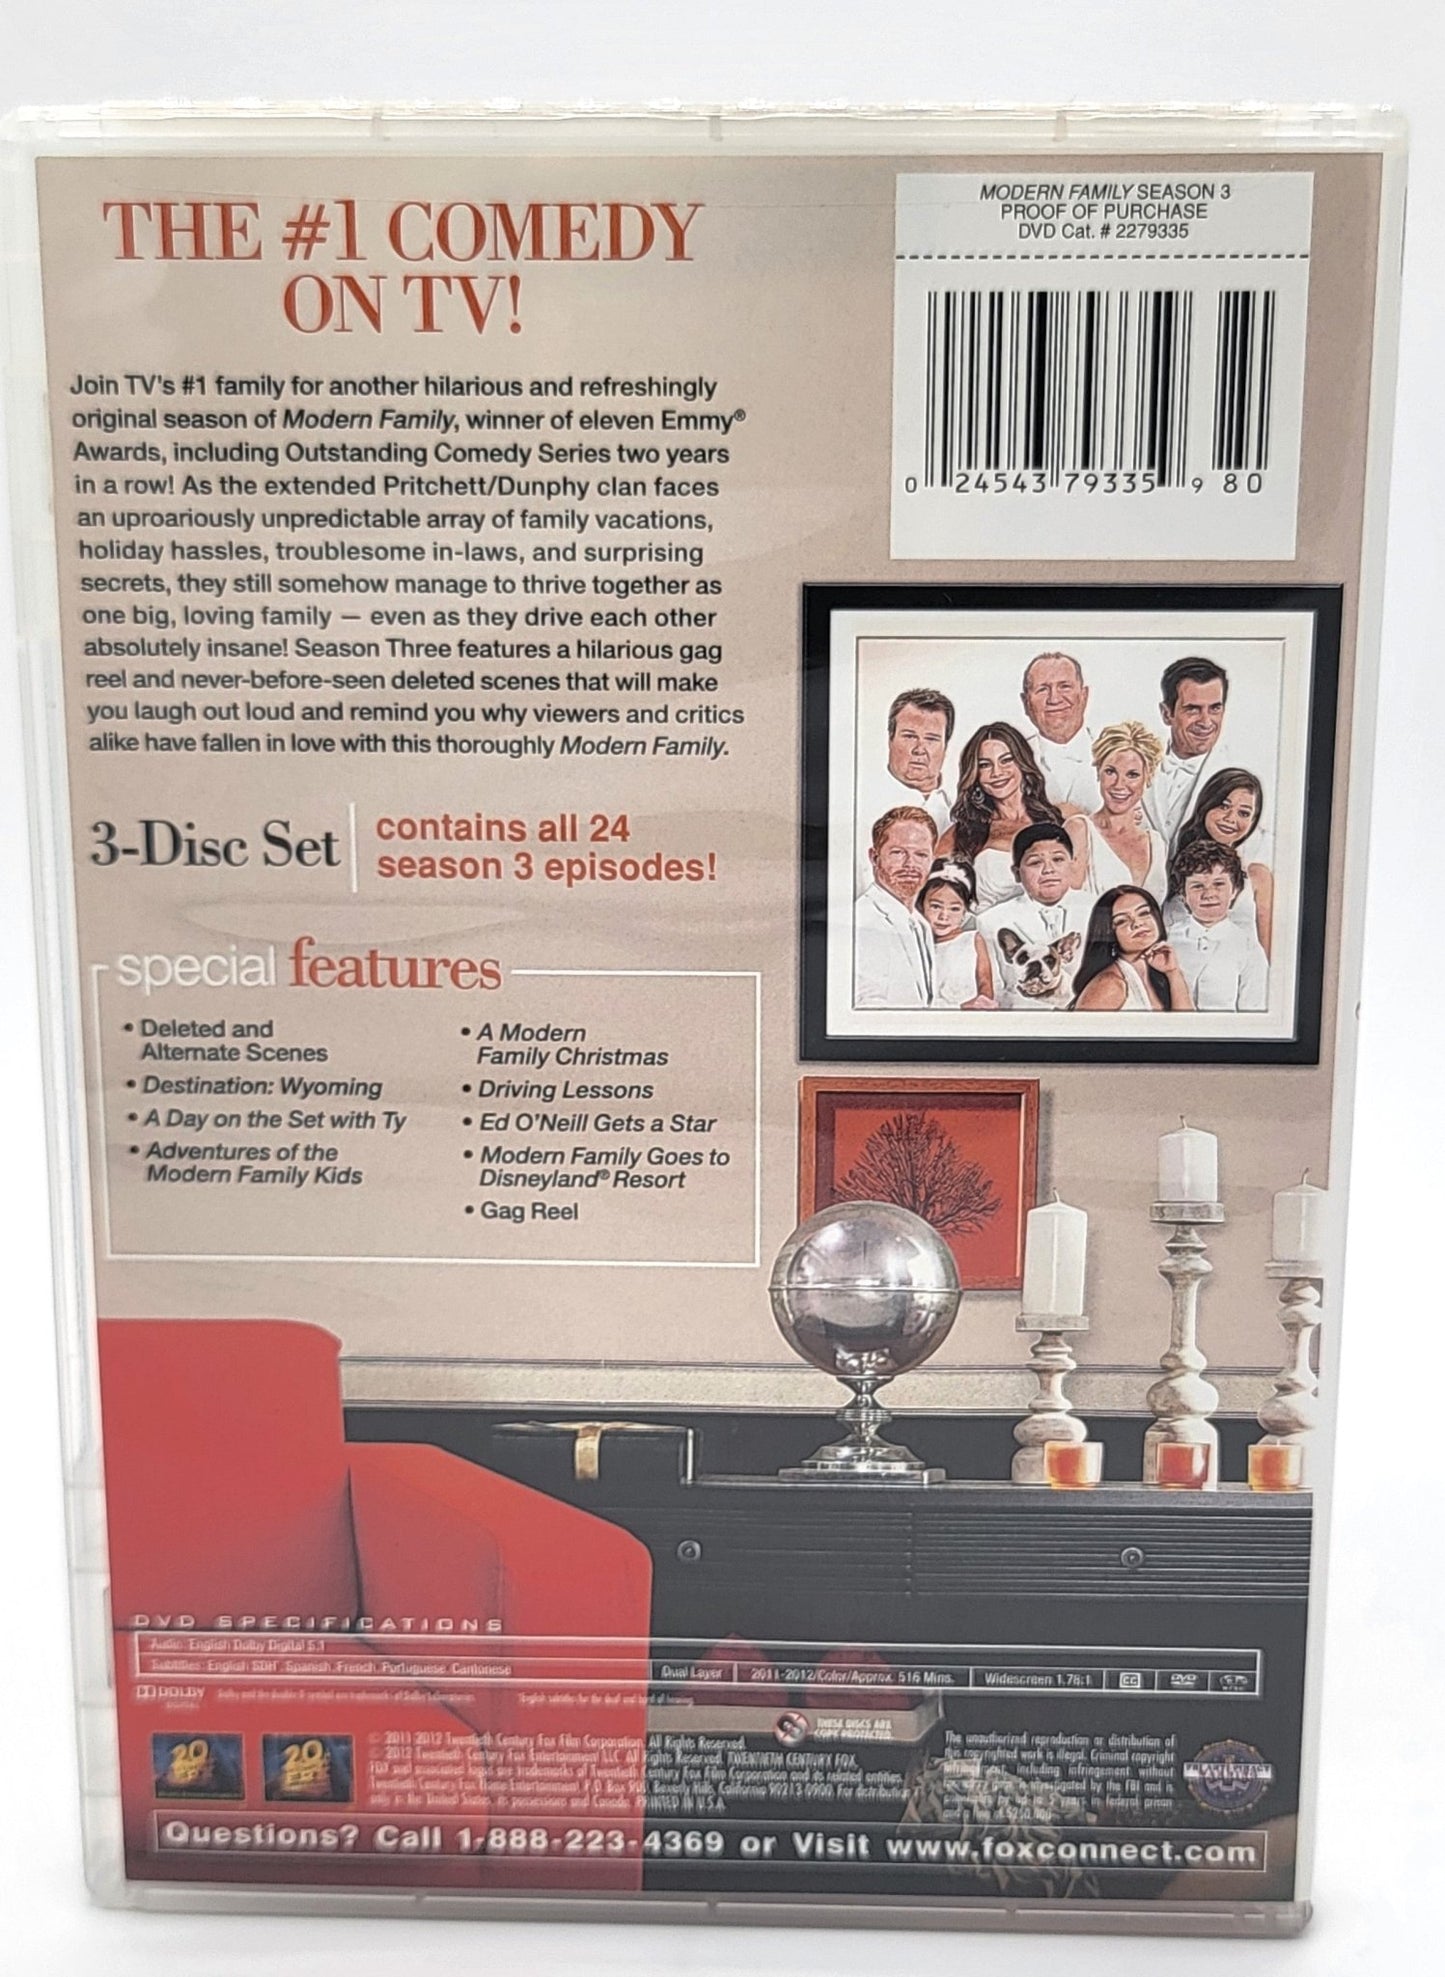 20th Century Fox - Modern Family Season 3 | DVD | Widescreen - Complete 3rd Season - 3 Disc Set - DVD - Steady Bunny Shop